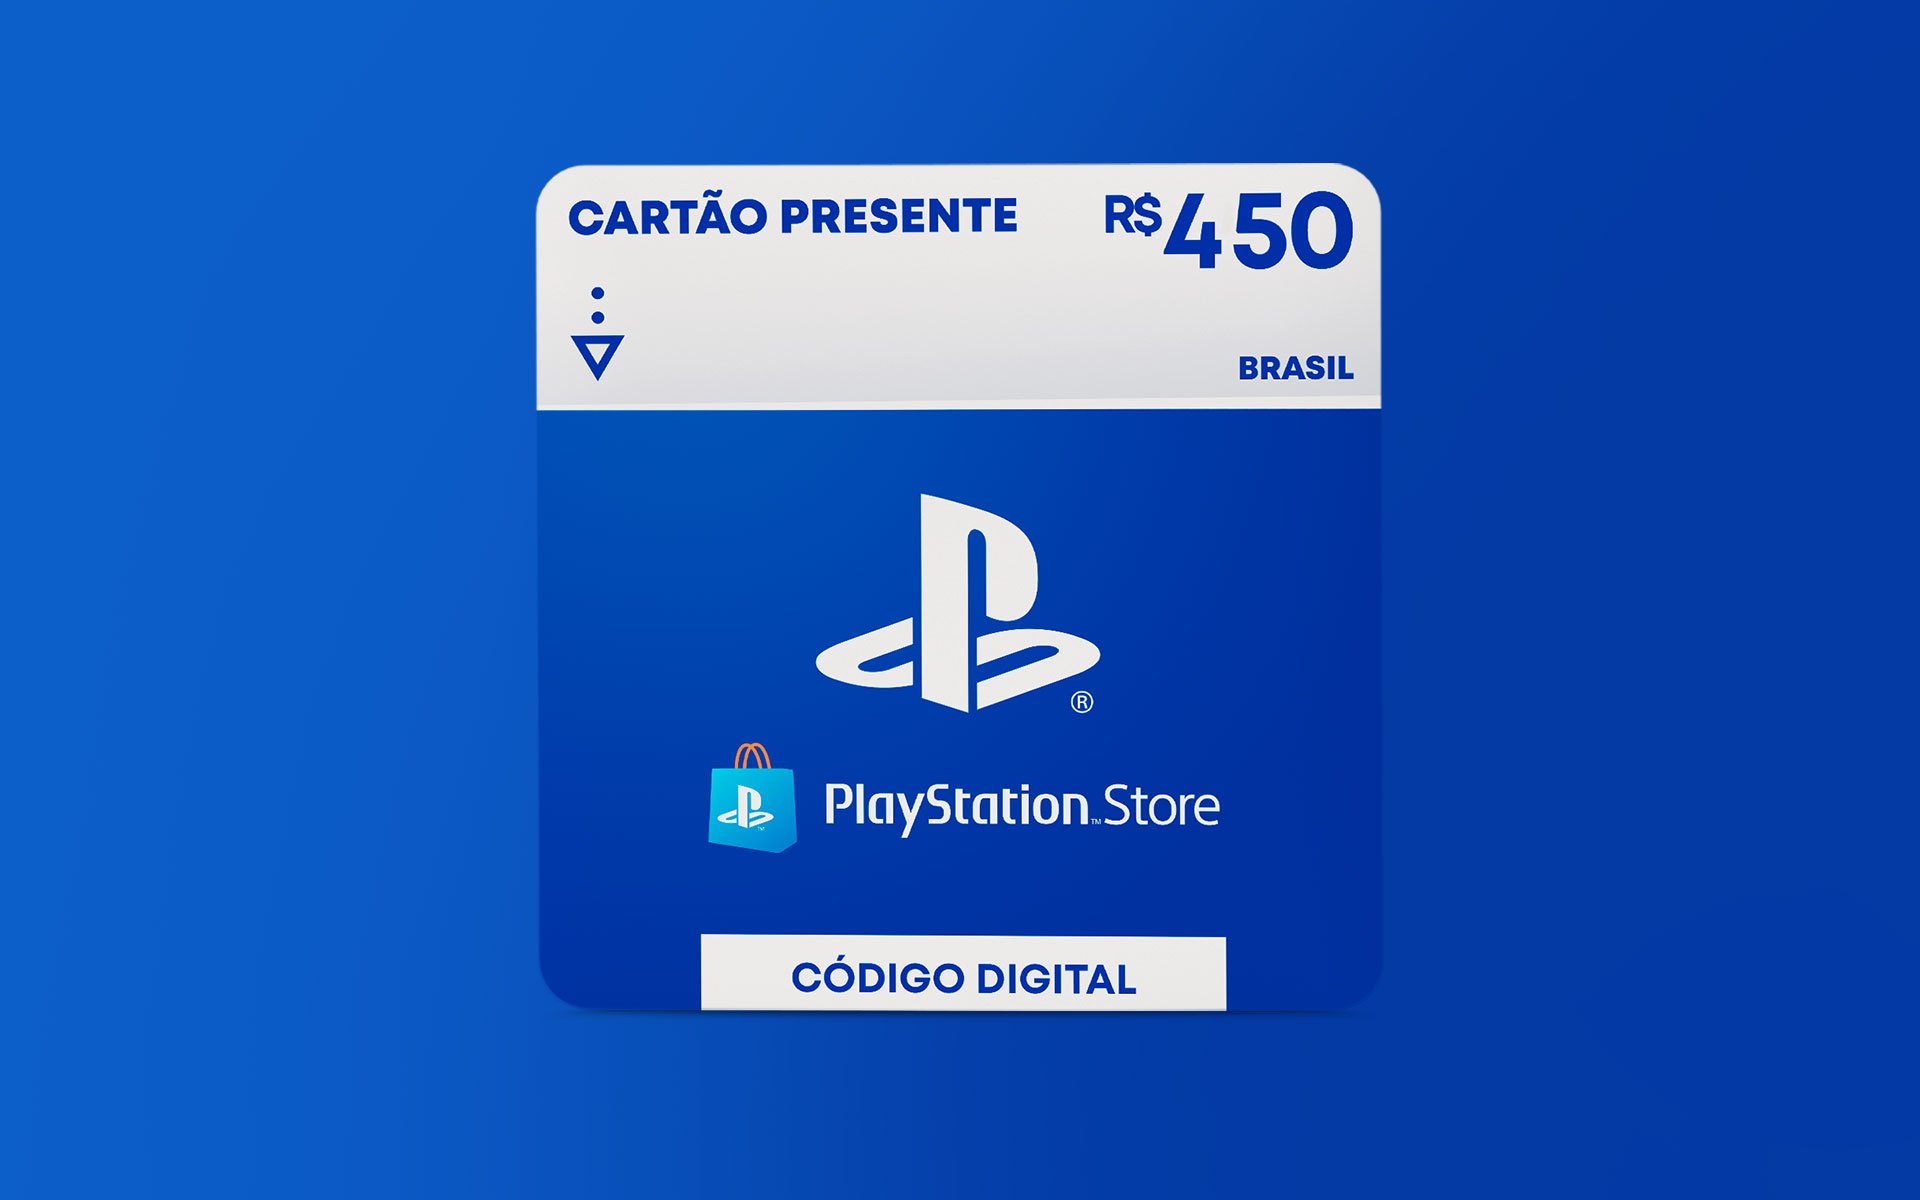 R$450 PlayStation Store - Cartão Presente Digital [Exclusivo Brasil]